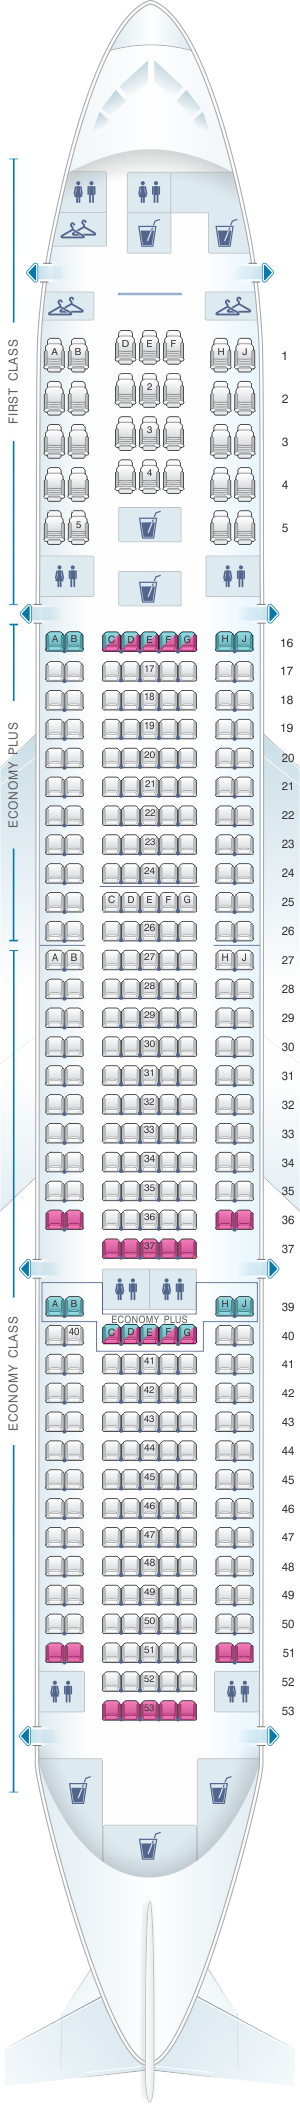 Boeing 777 Seating Map